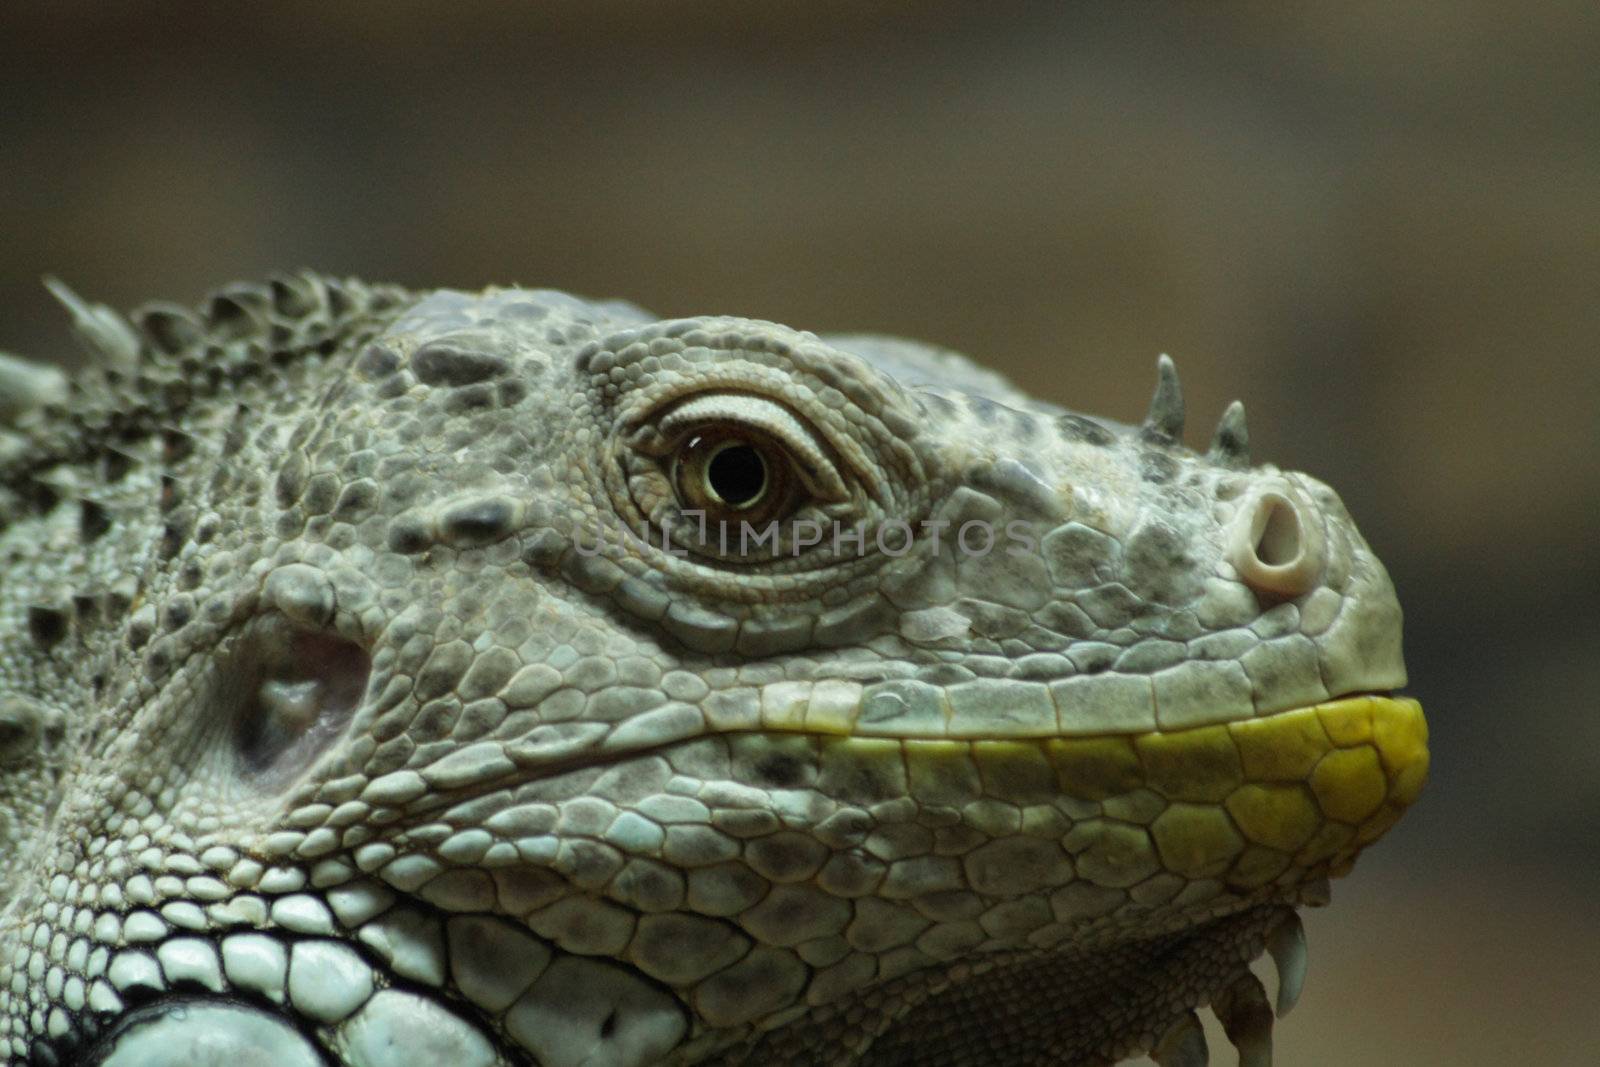 Close up of the iguana's head.